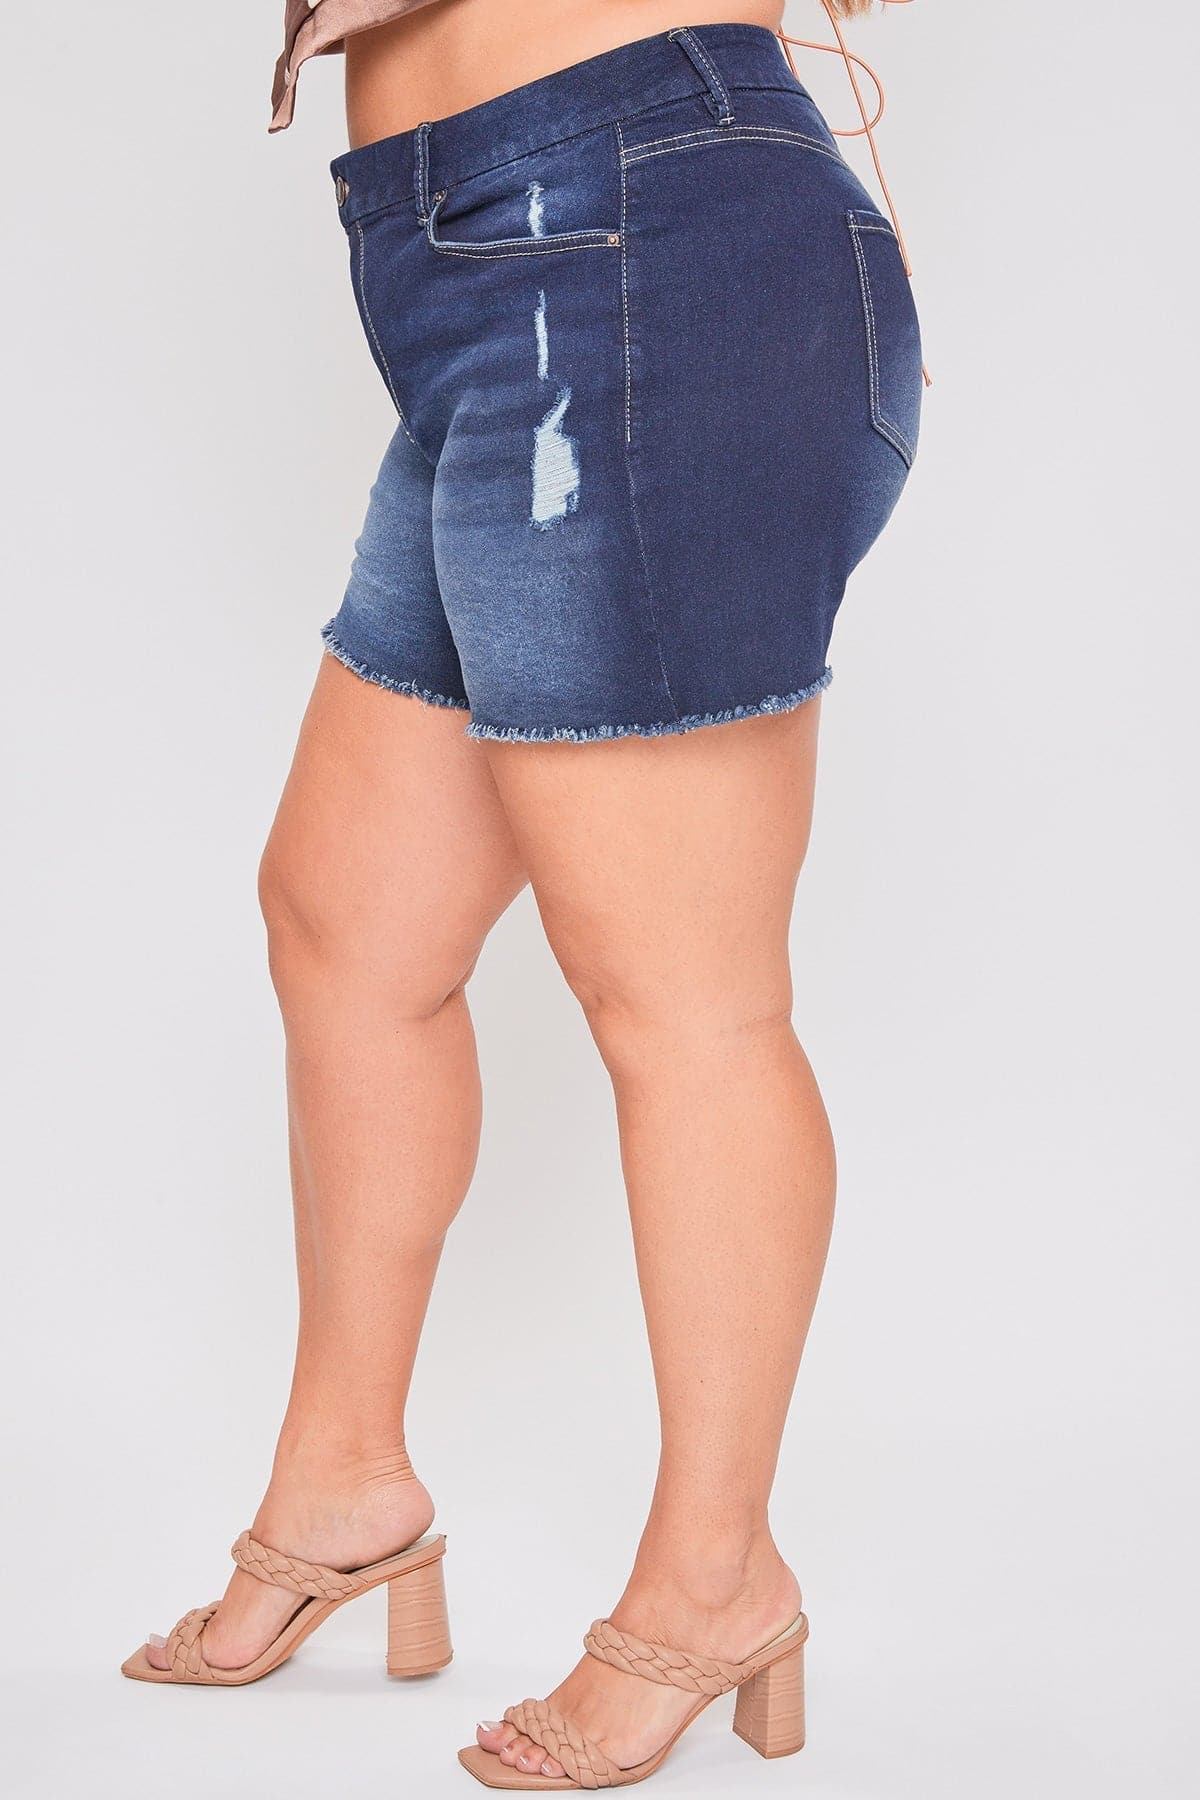 Plus Size Women's Curvy Fit  Jeans Shorts With Fray Hem-Sale